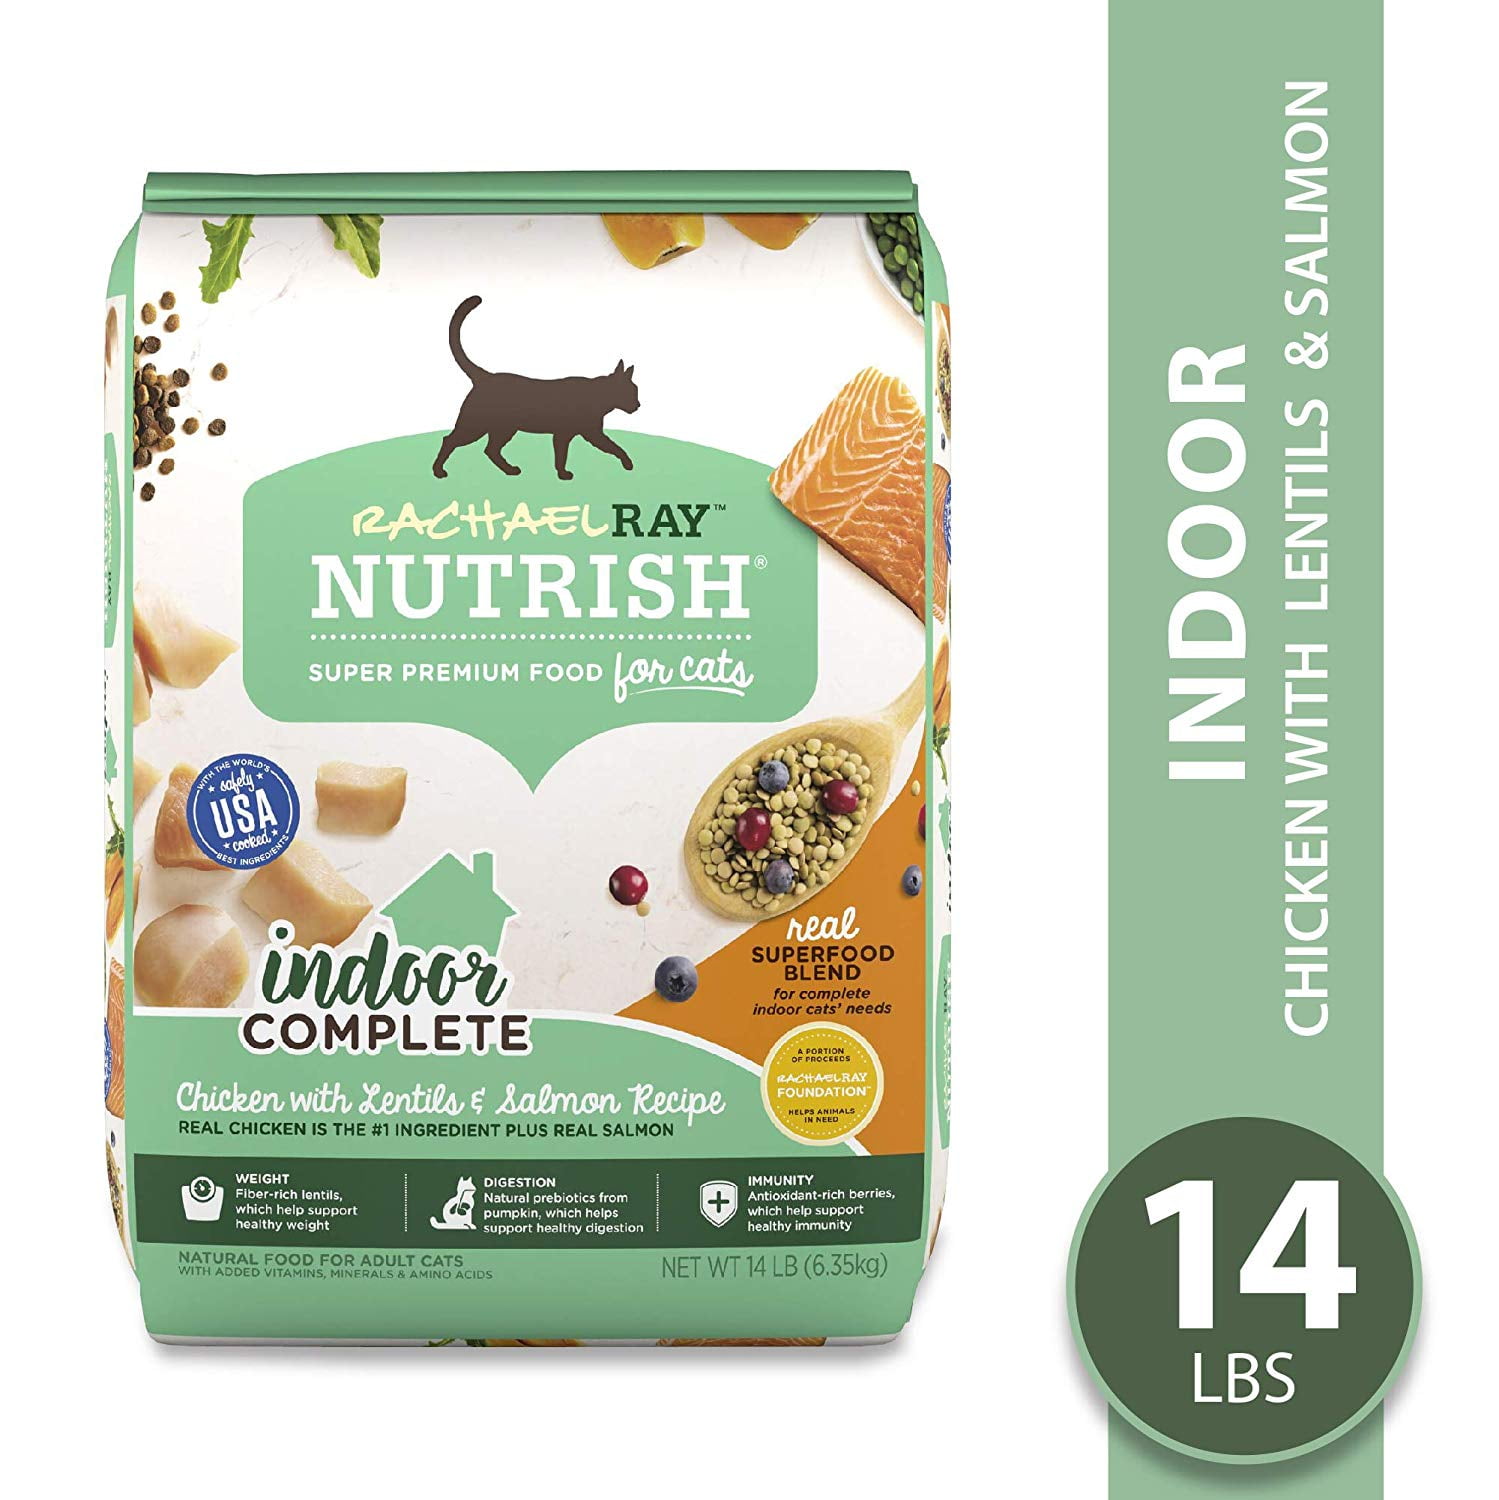 Nutrish. Nutrish детское питание. Super Premium Dry food for Cats. Nutrish Нидерландия. Complete with natural senior